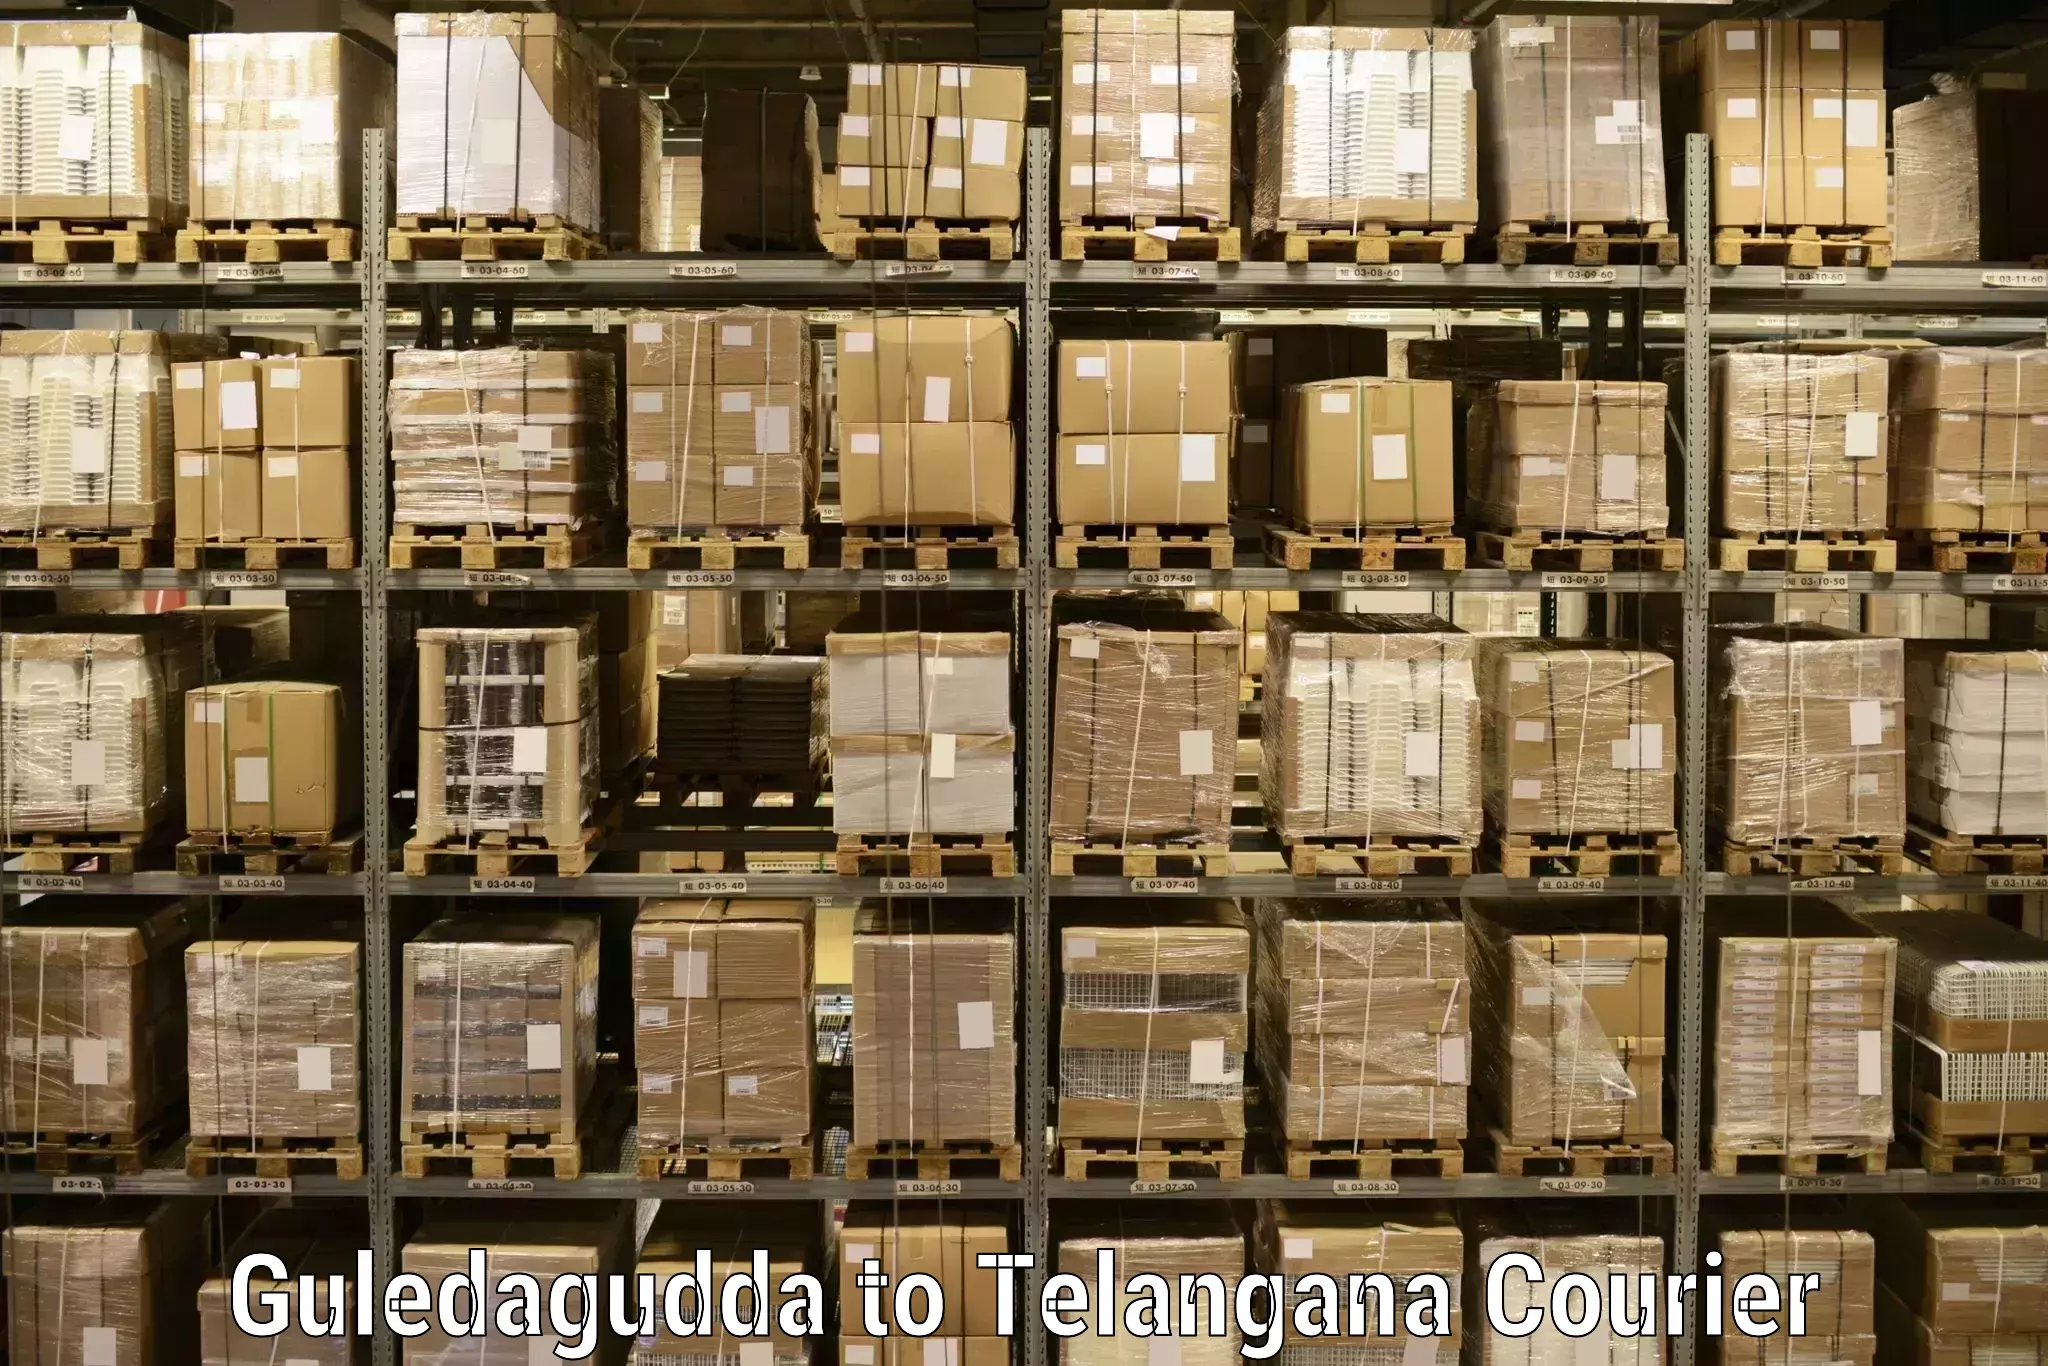 Package tracking Guledagudda to Manneguda